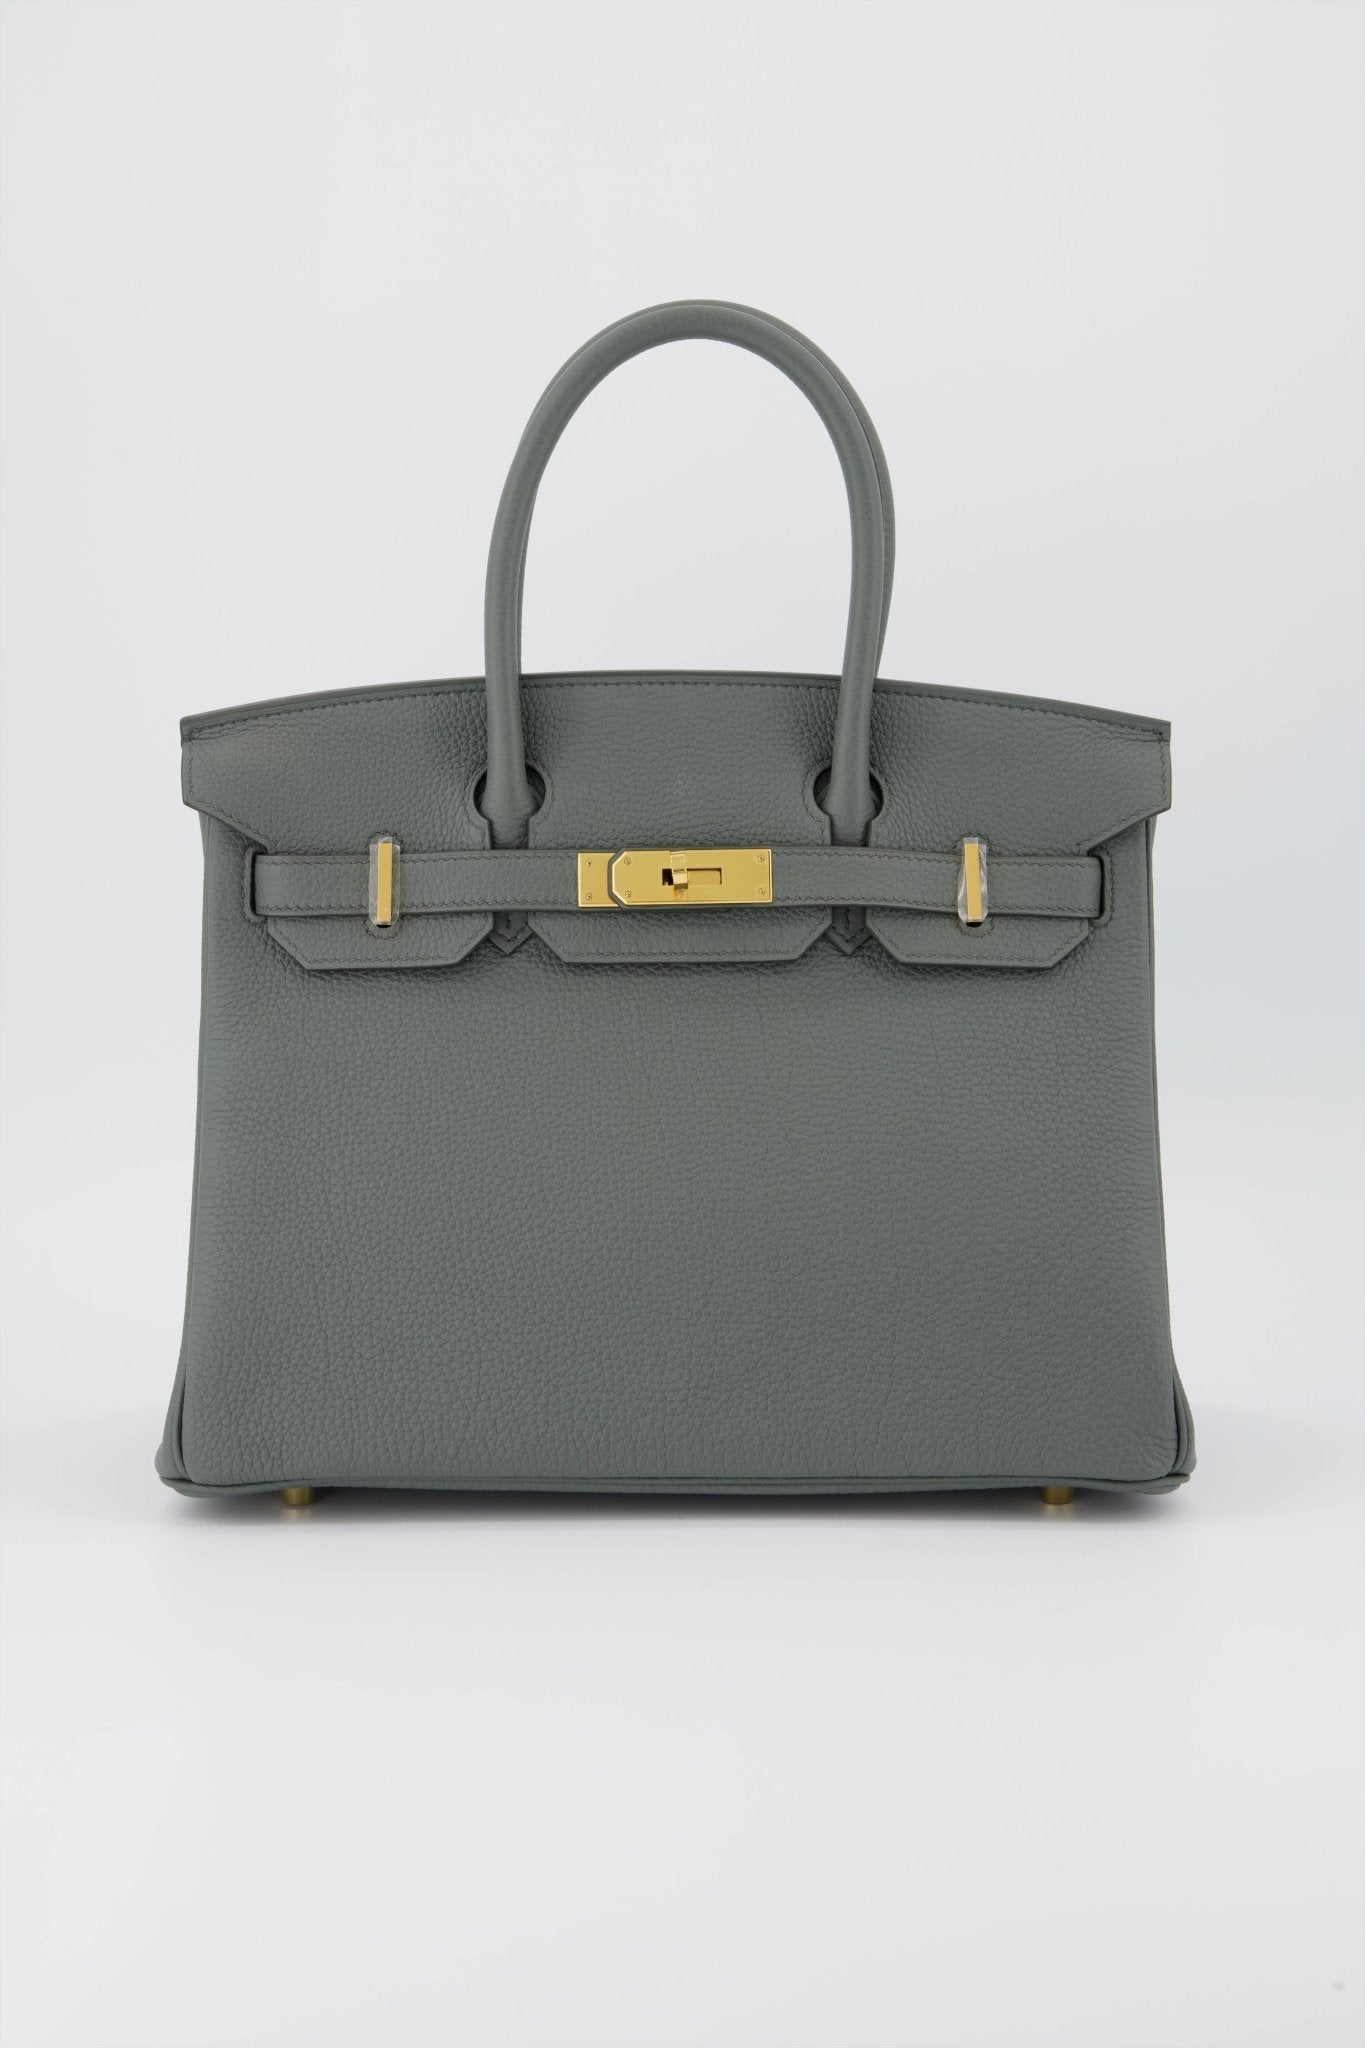 Hermes Birkin 30 Handbag Vert Amande Togo Leather With Gold Hardware